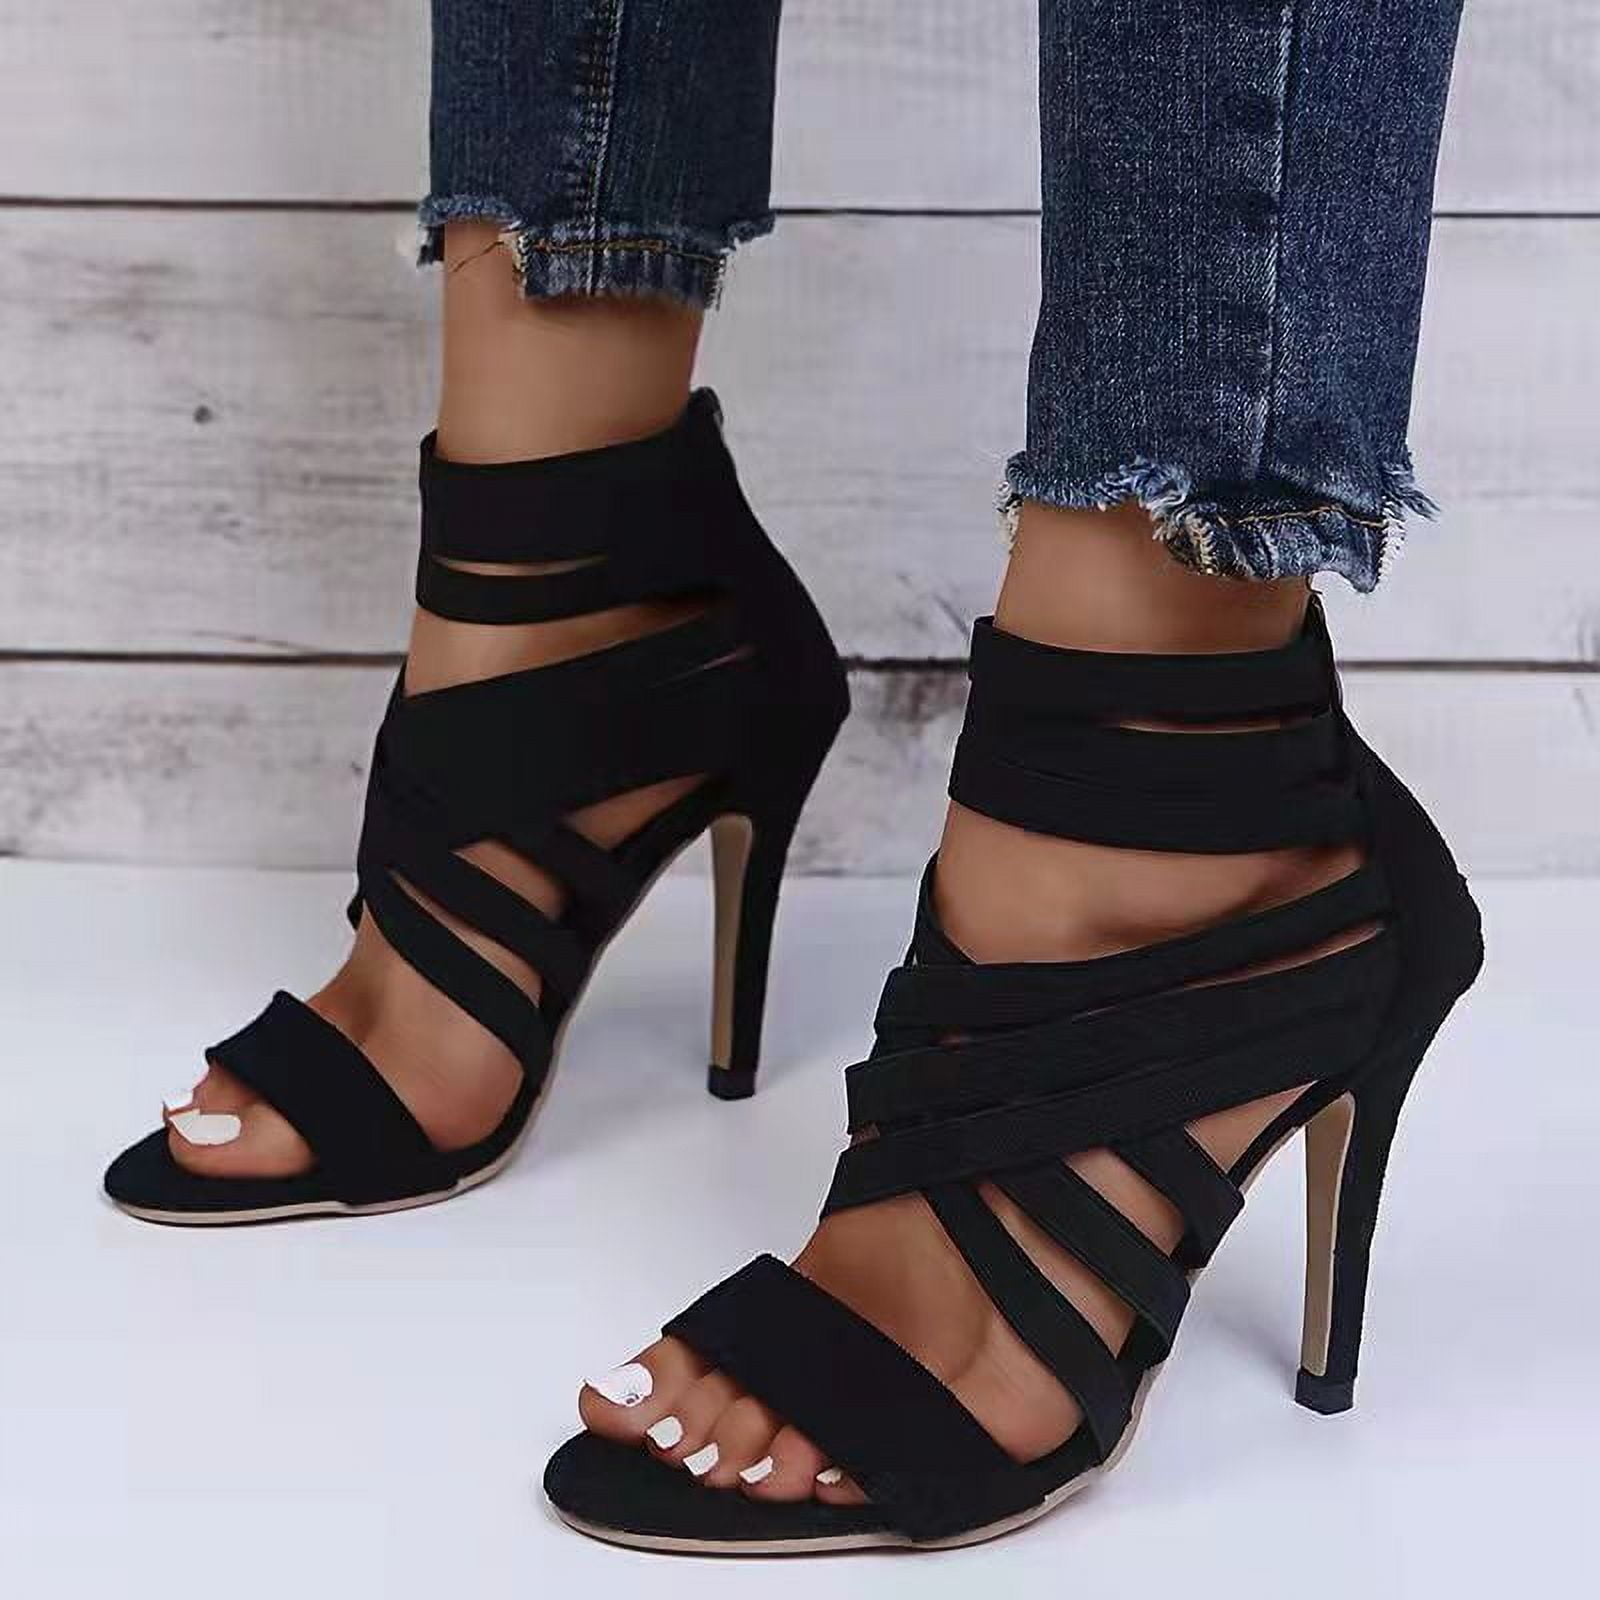 Strappy Heels For Women,Women's Pumps Kitten Heel Pointed Toe Low Heel ...